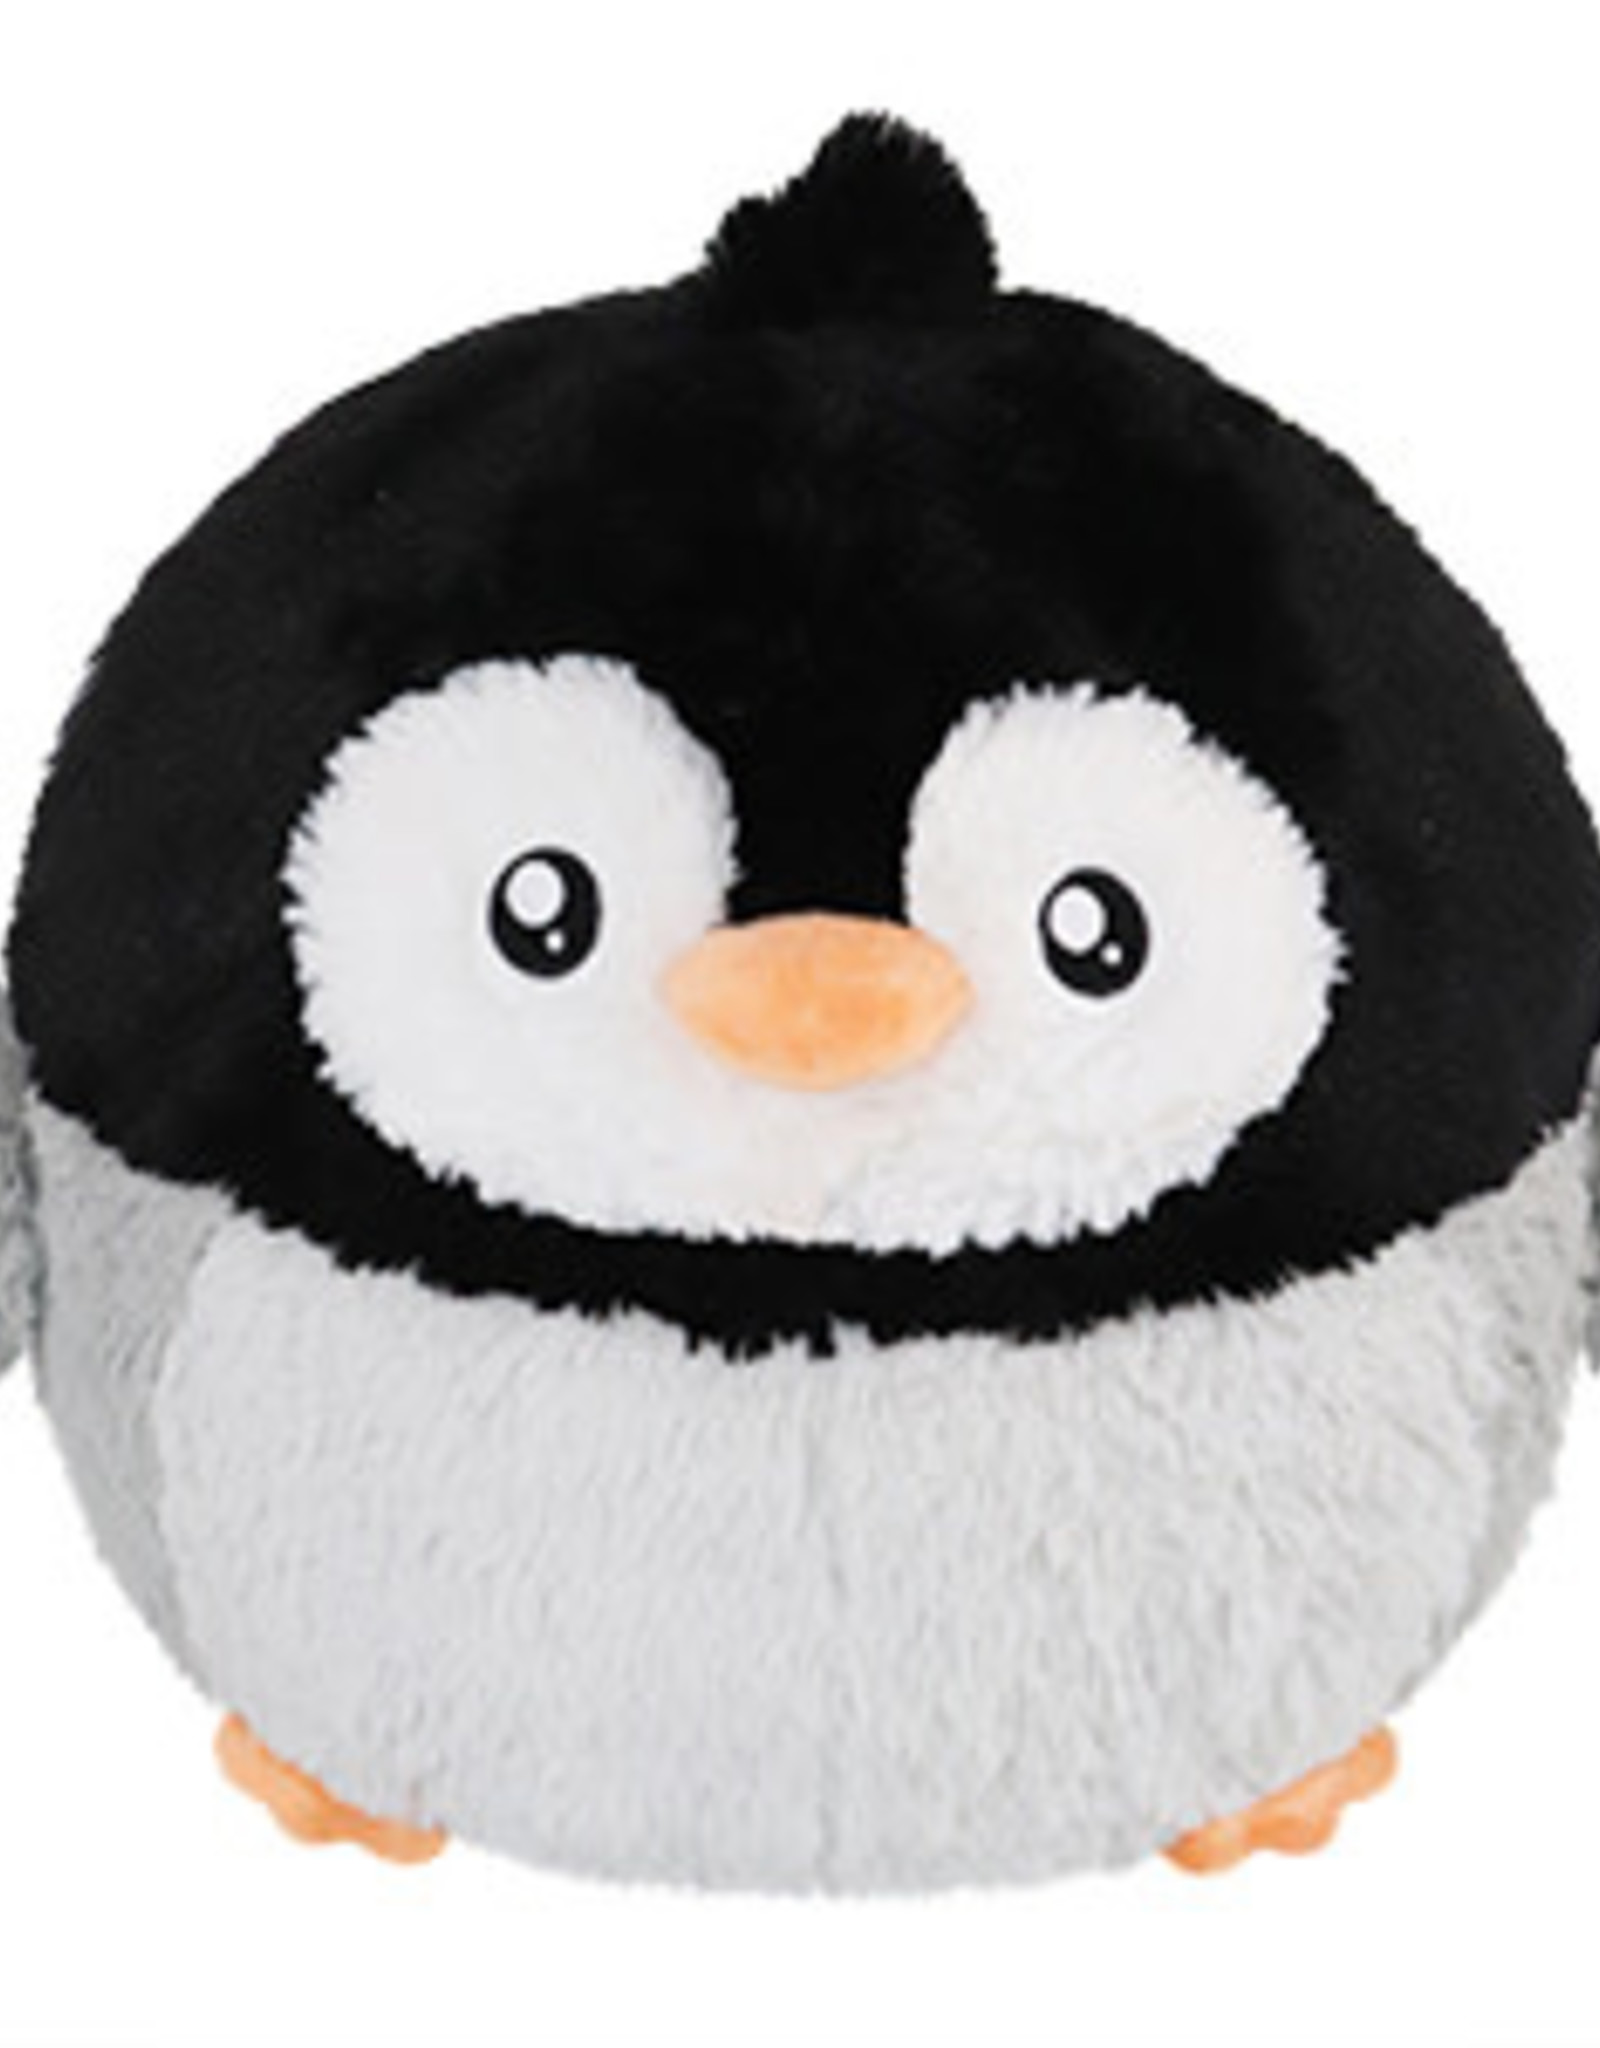 Squishables Baby Penguin Squishable